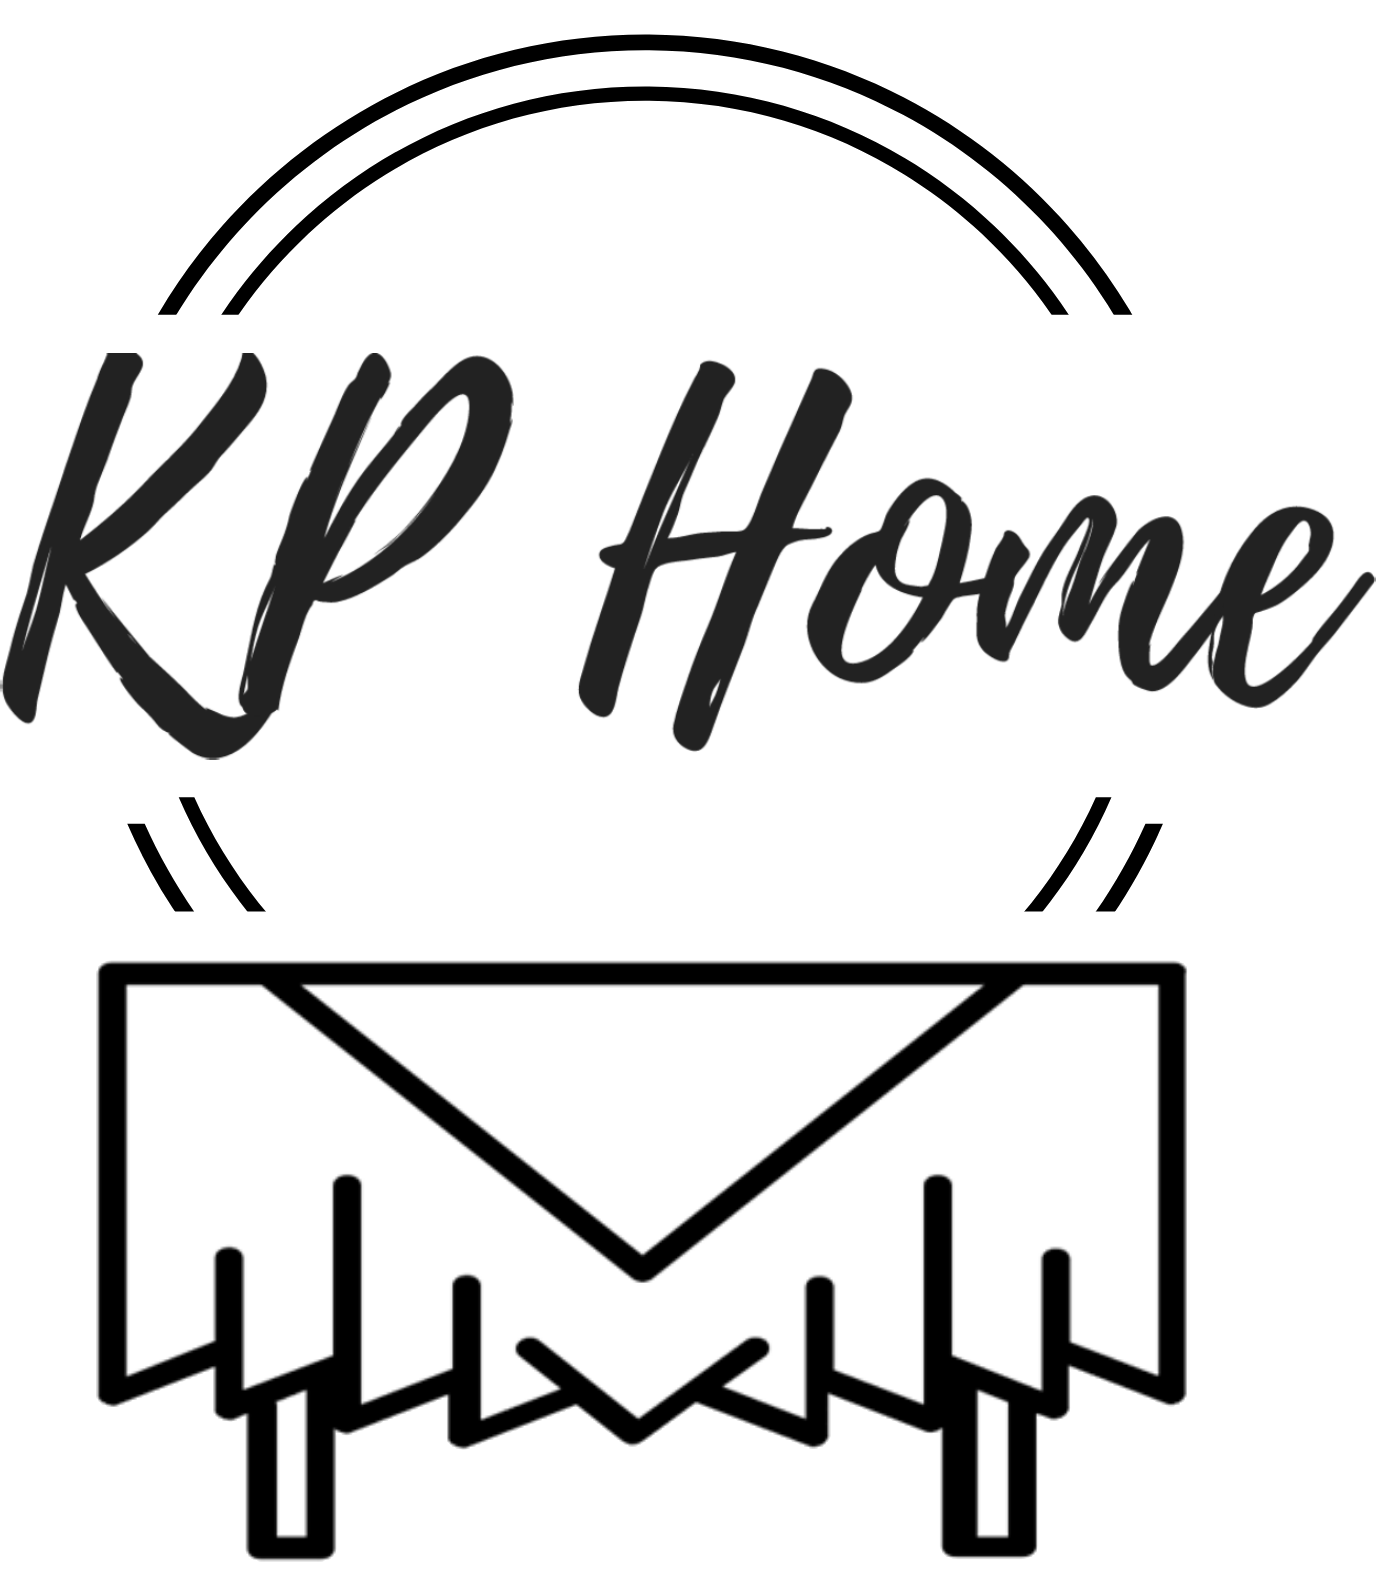 KP Home